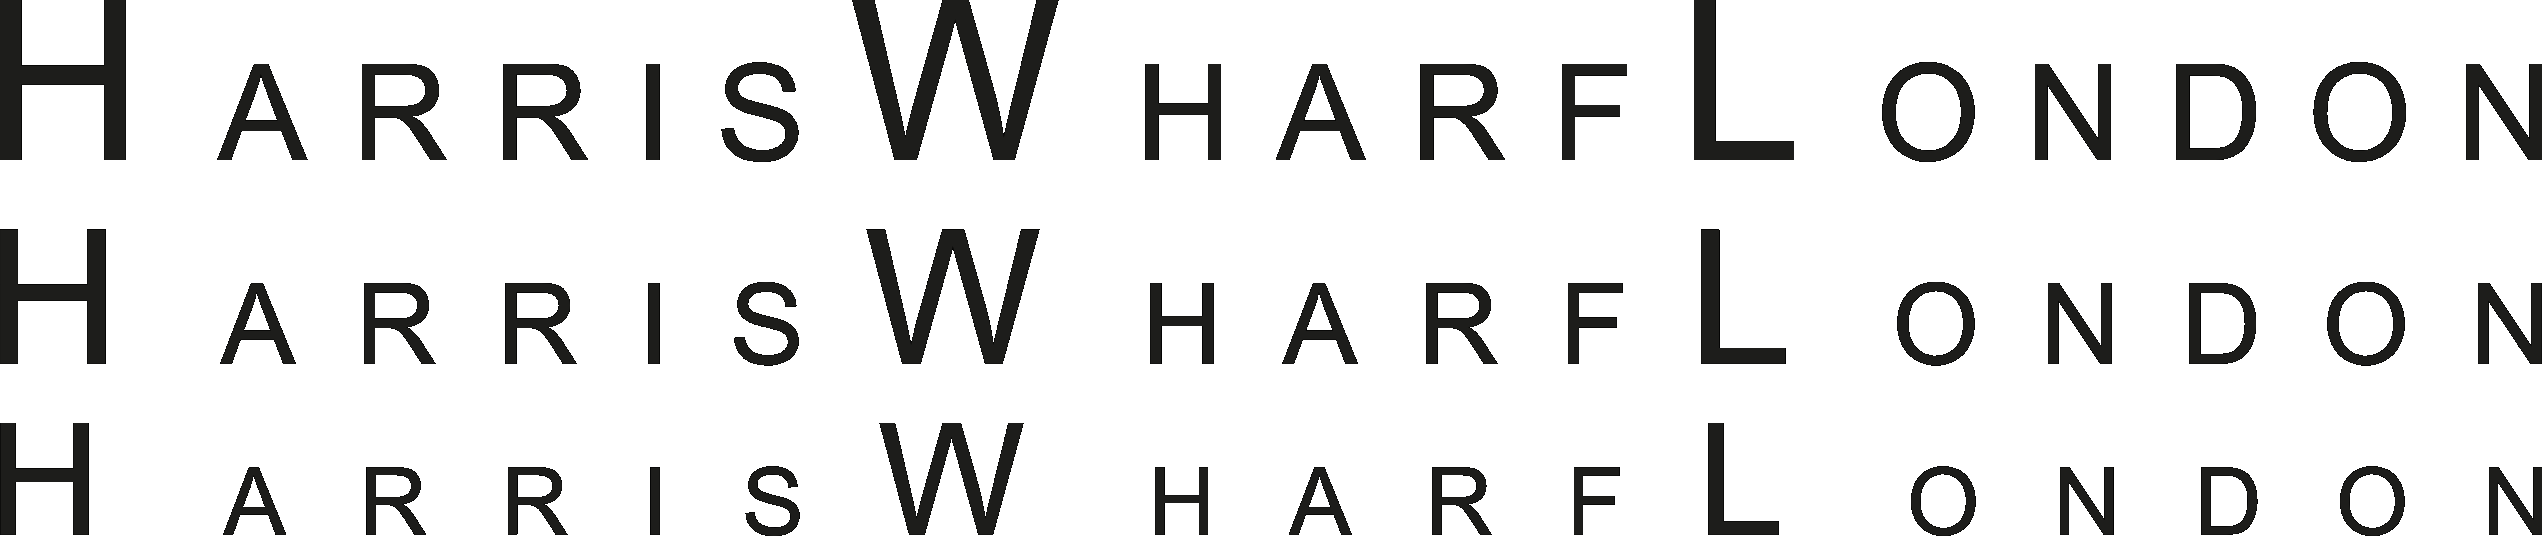 Harris Wharf London Size charts